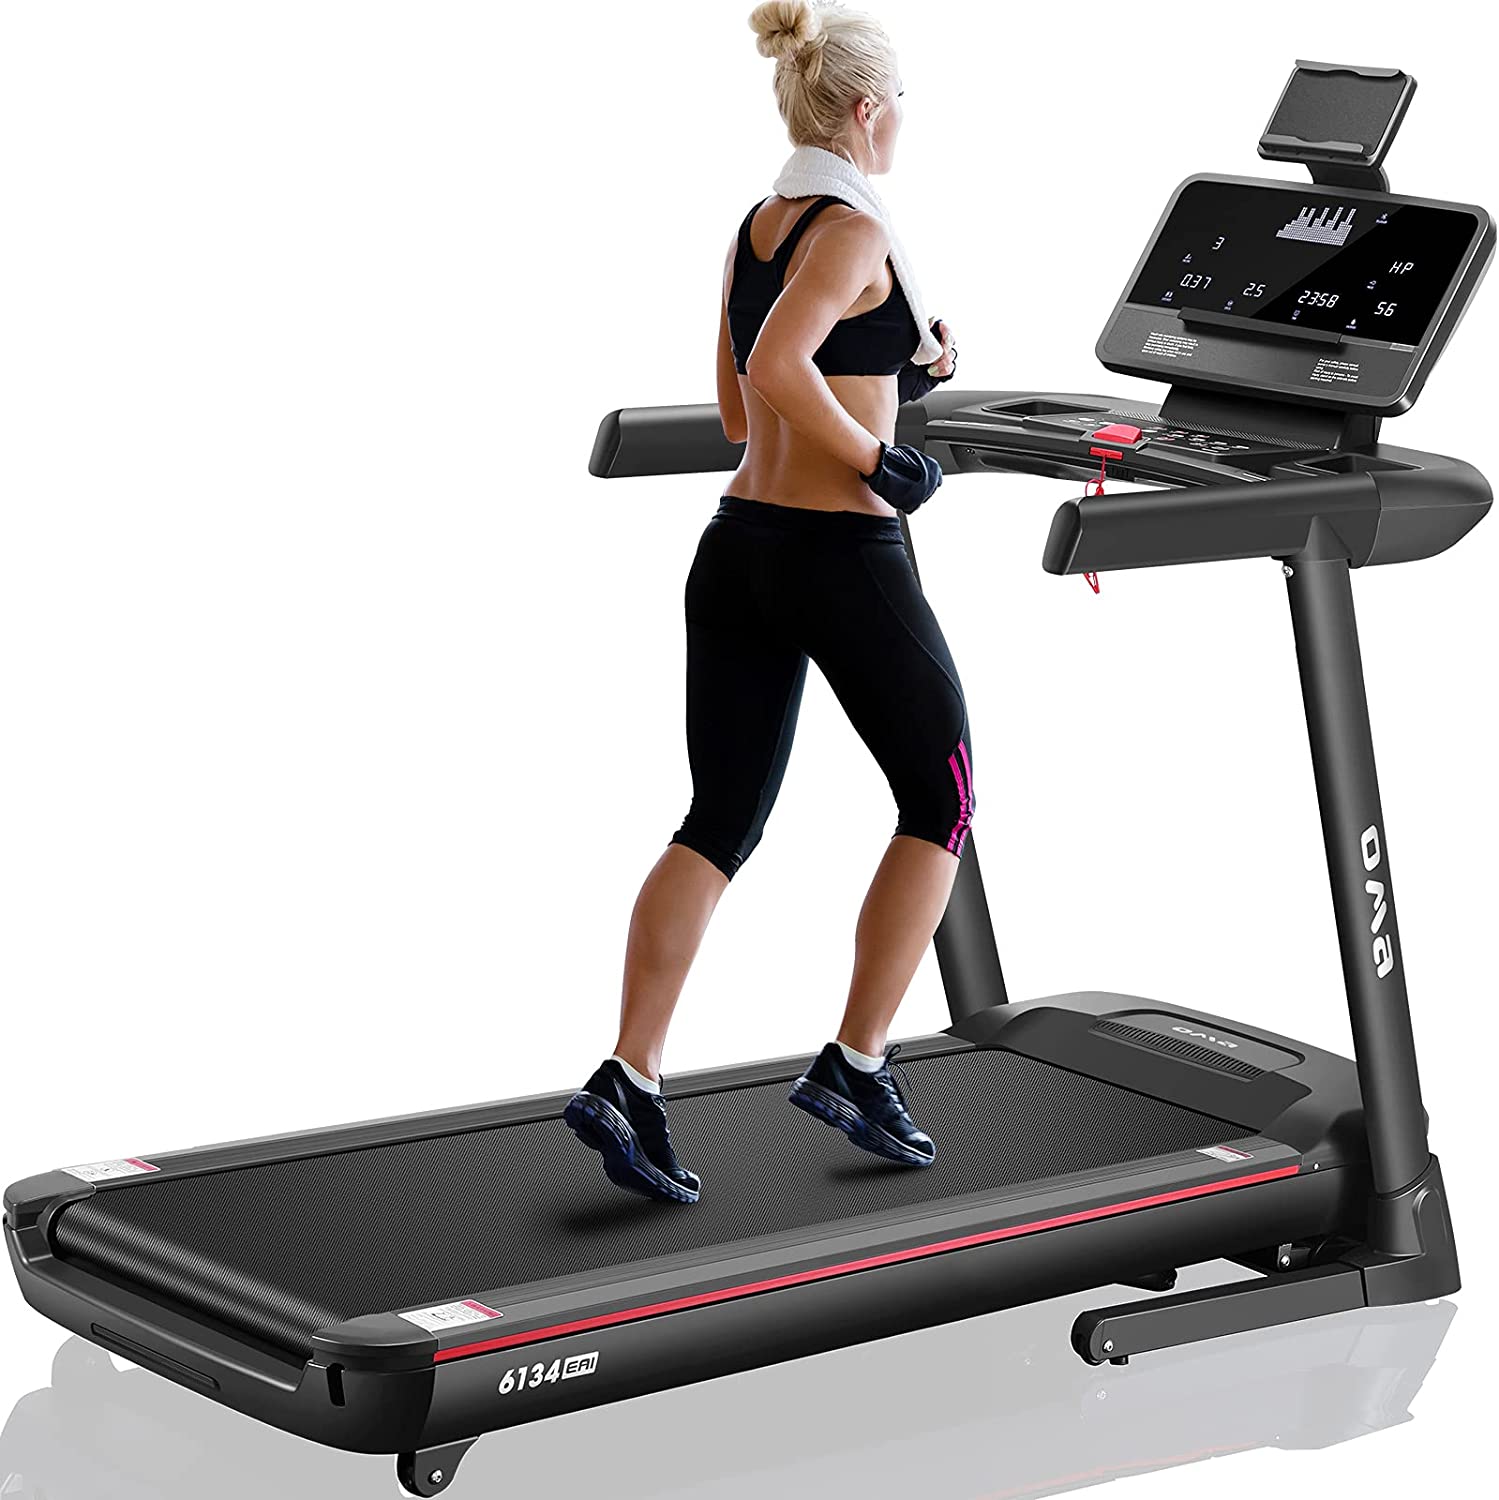 OMA Treadmill for Home 6134EAI 